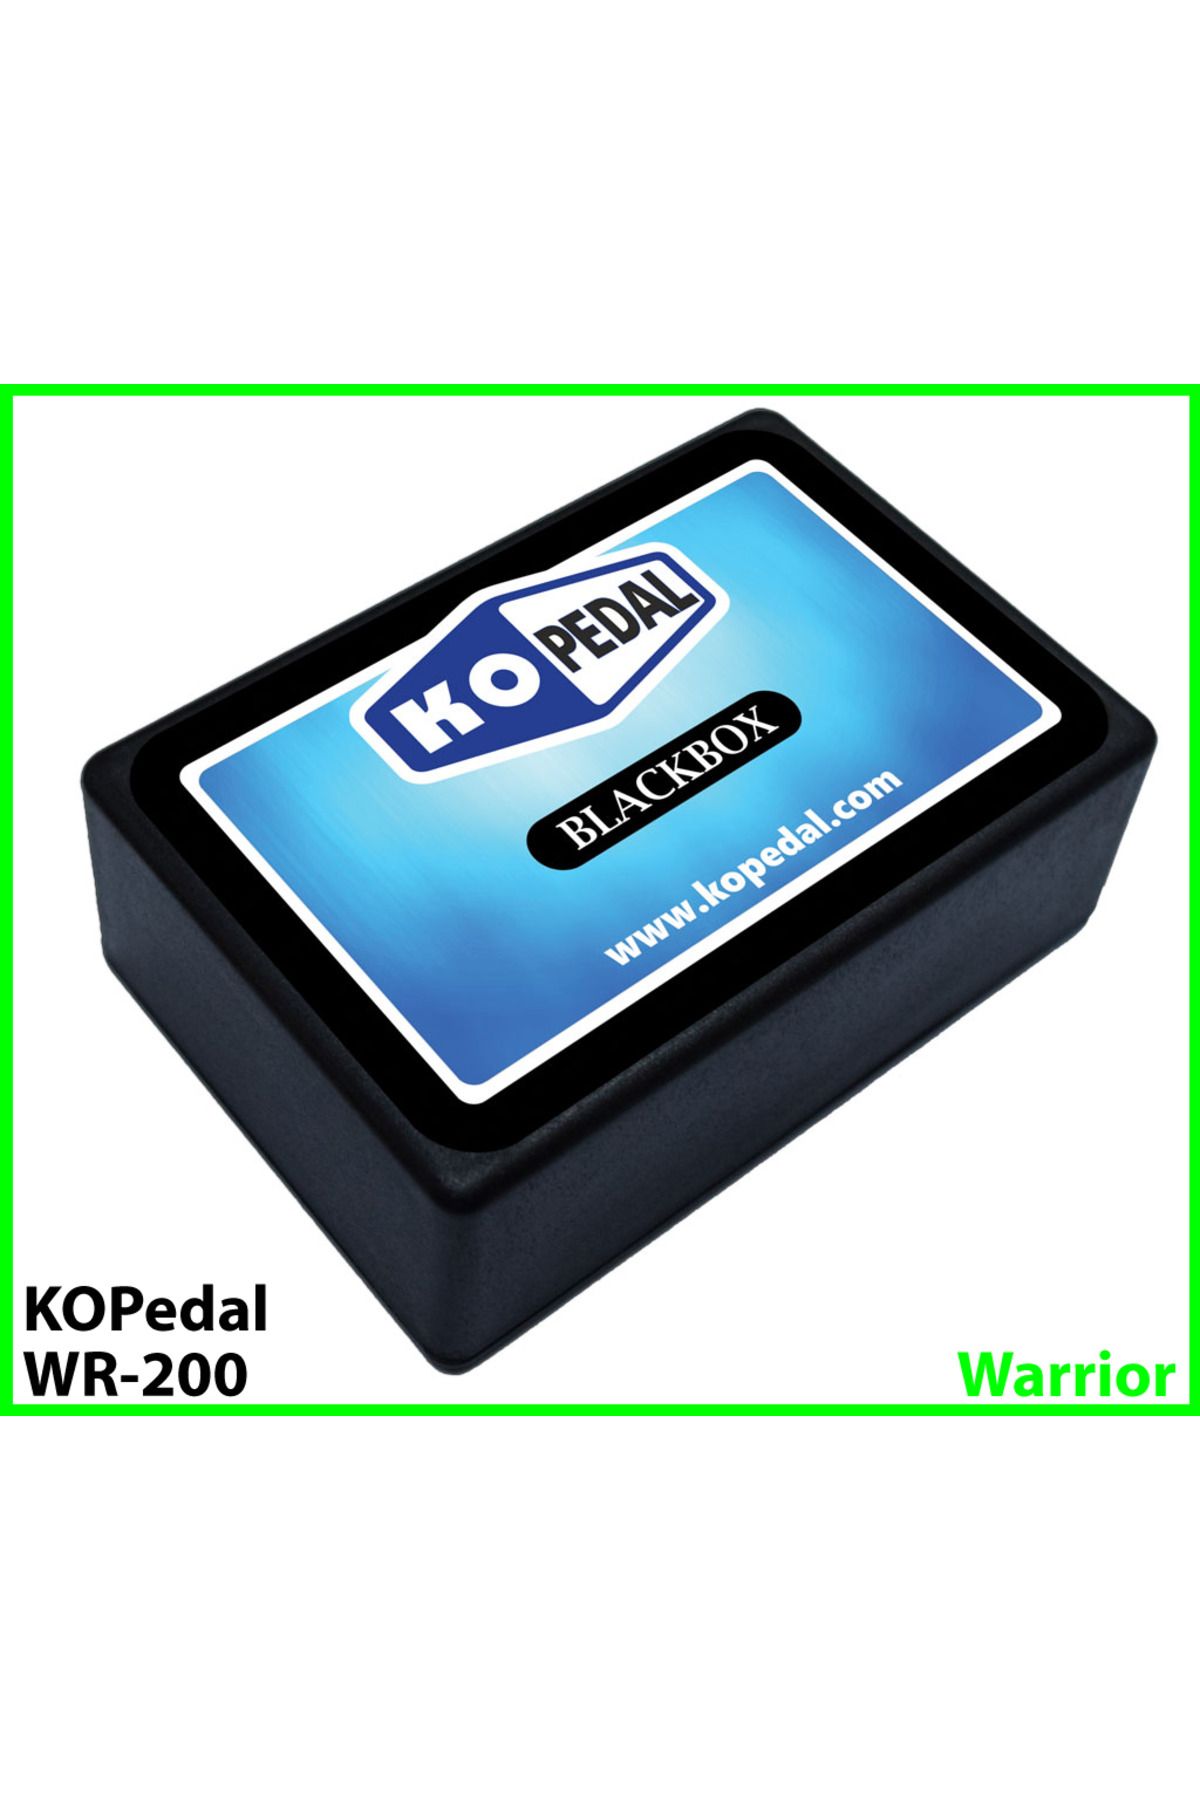 kopedal Warrior USKO/PVP Combo BlackBOX WR-200